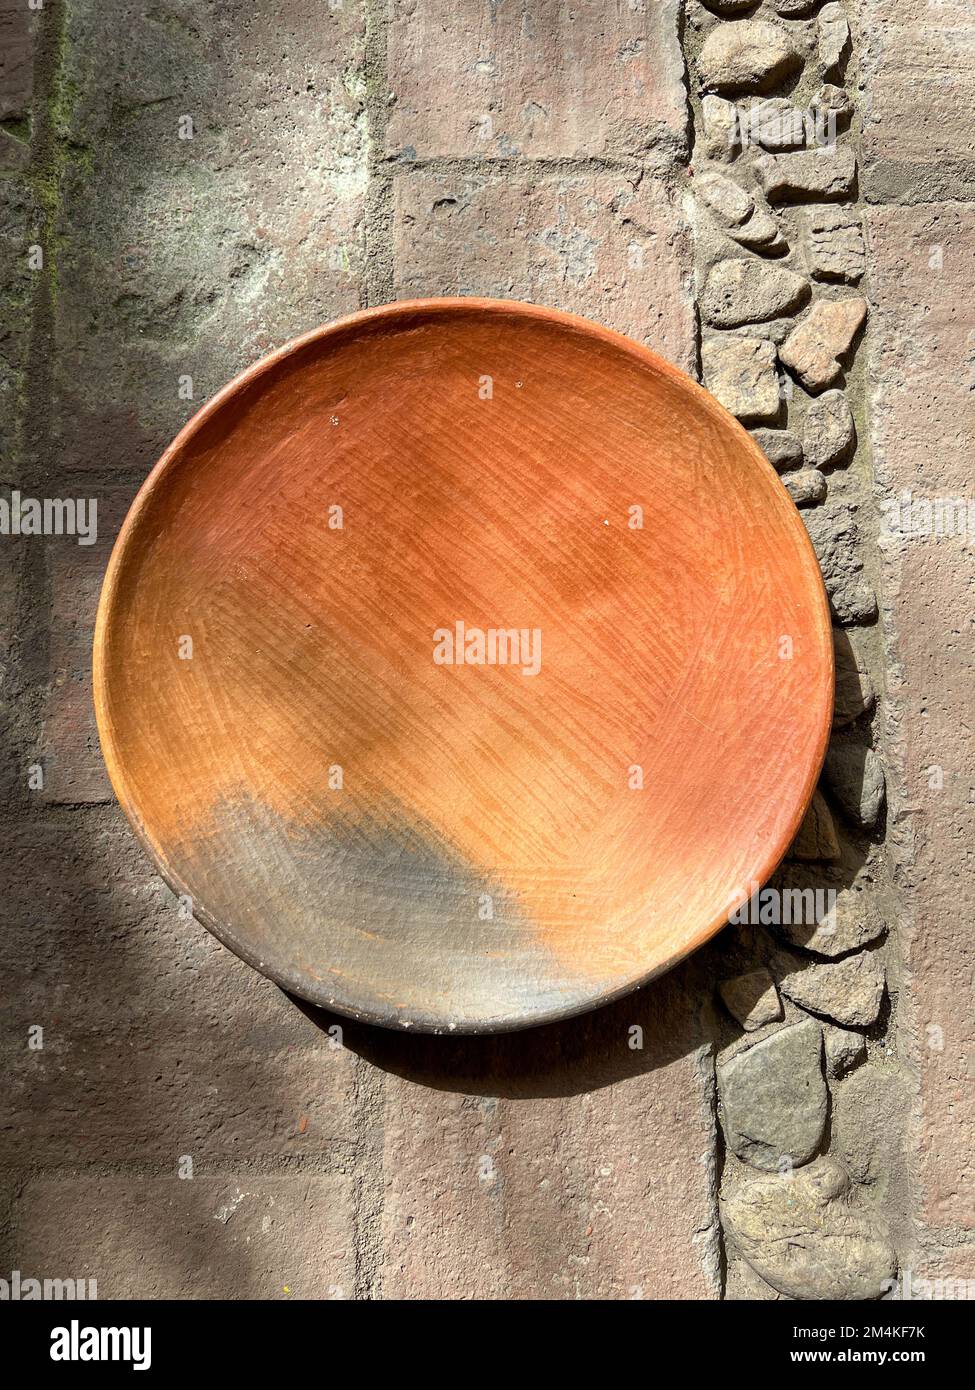 https://c8.alamy.com/comp/2M4KF7K/comal-de-barro-traditional-oaxaca-cooking-surface-made-from-earthenware-clay-2M4KF7K.jpg